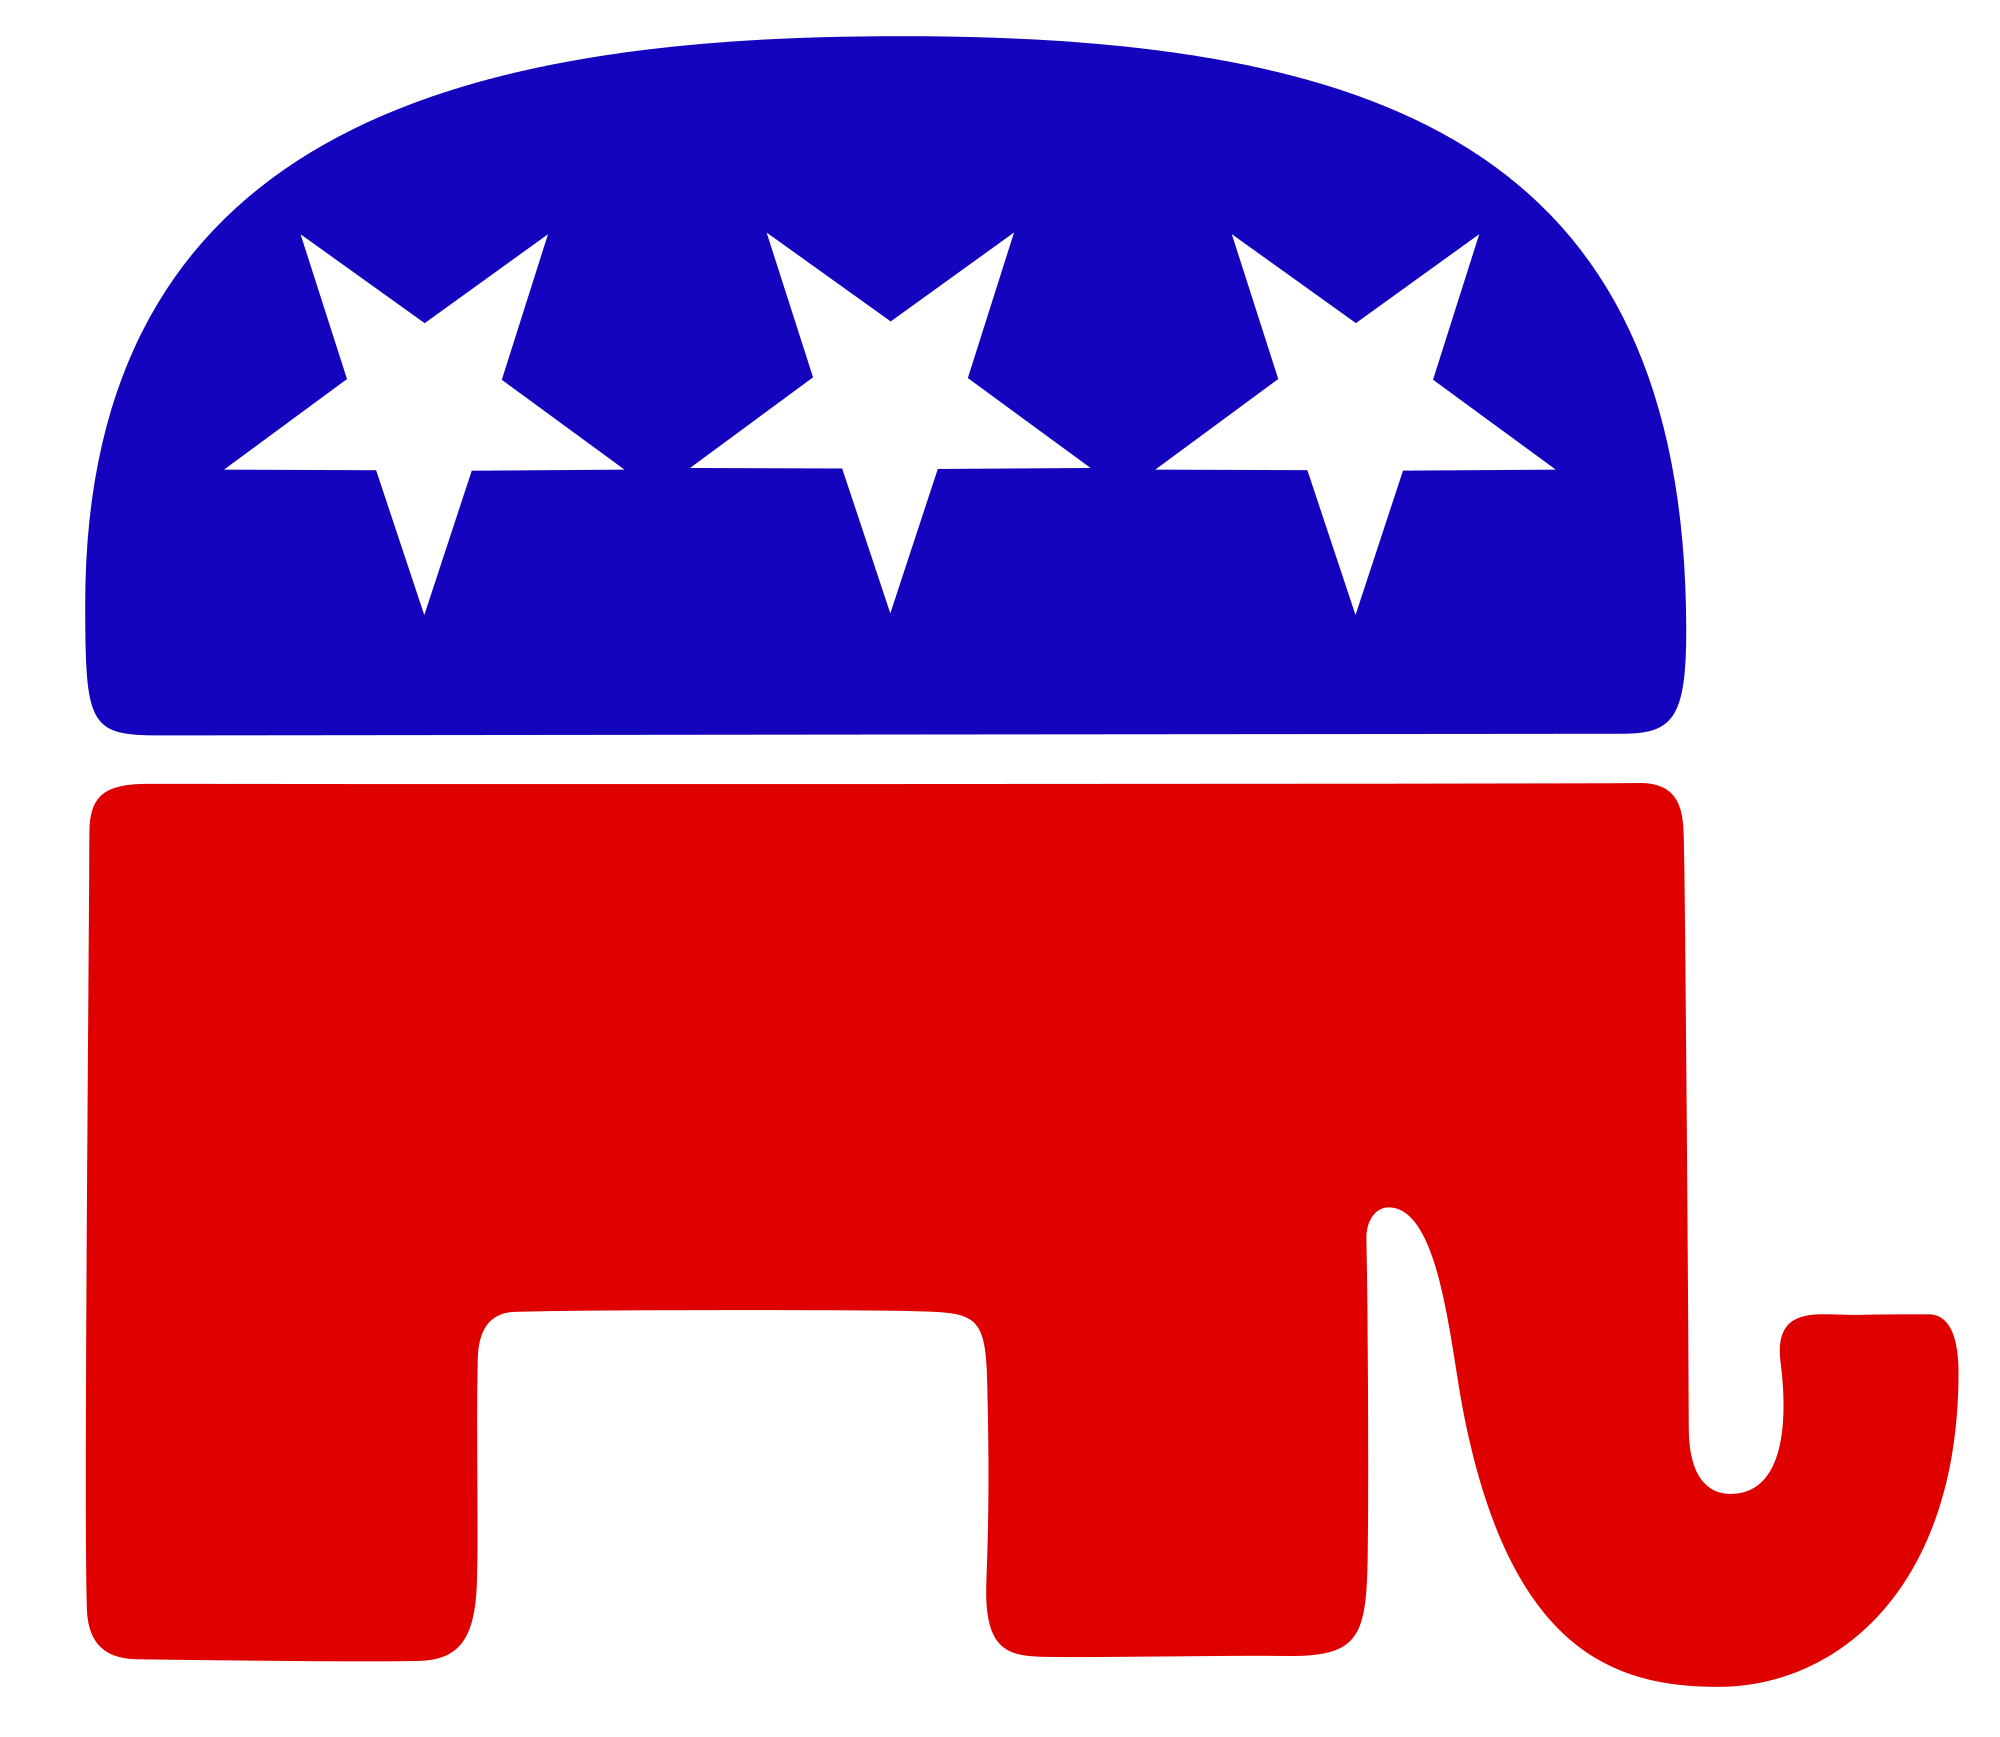 Republican Party Symbol | Young ...